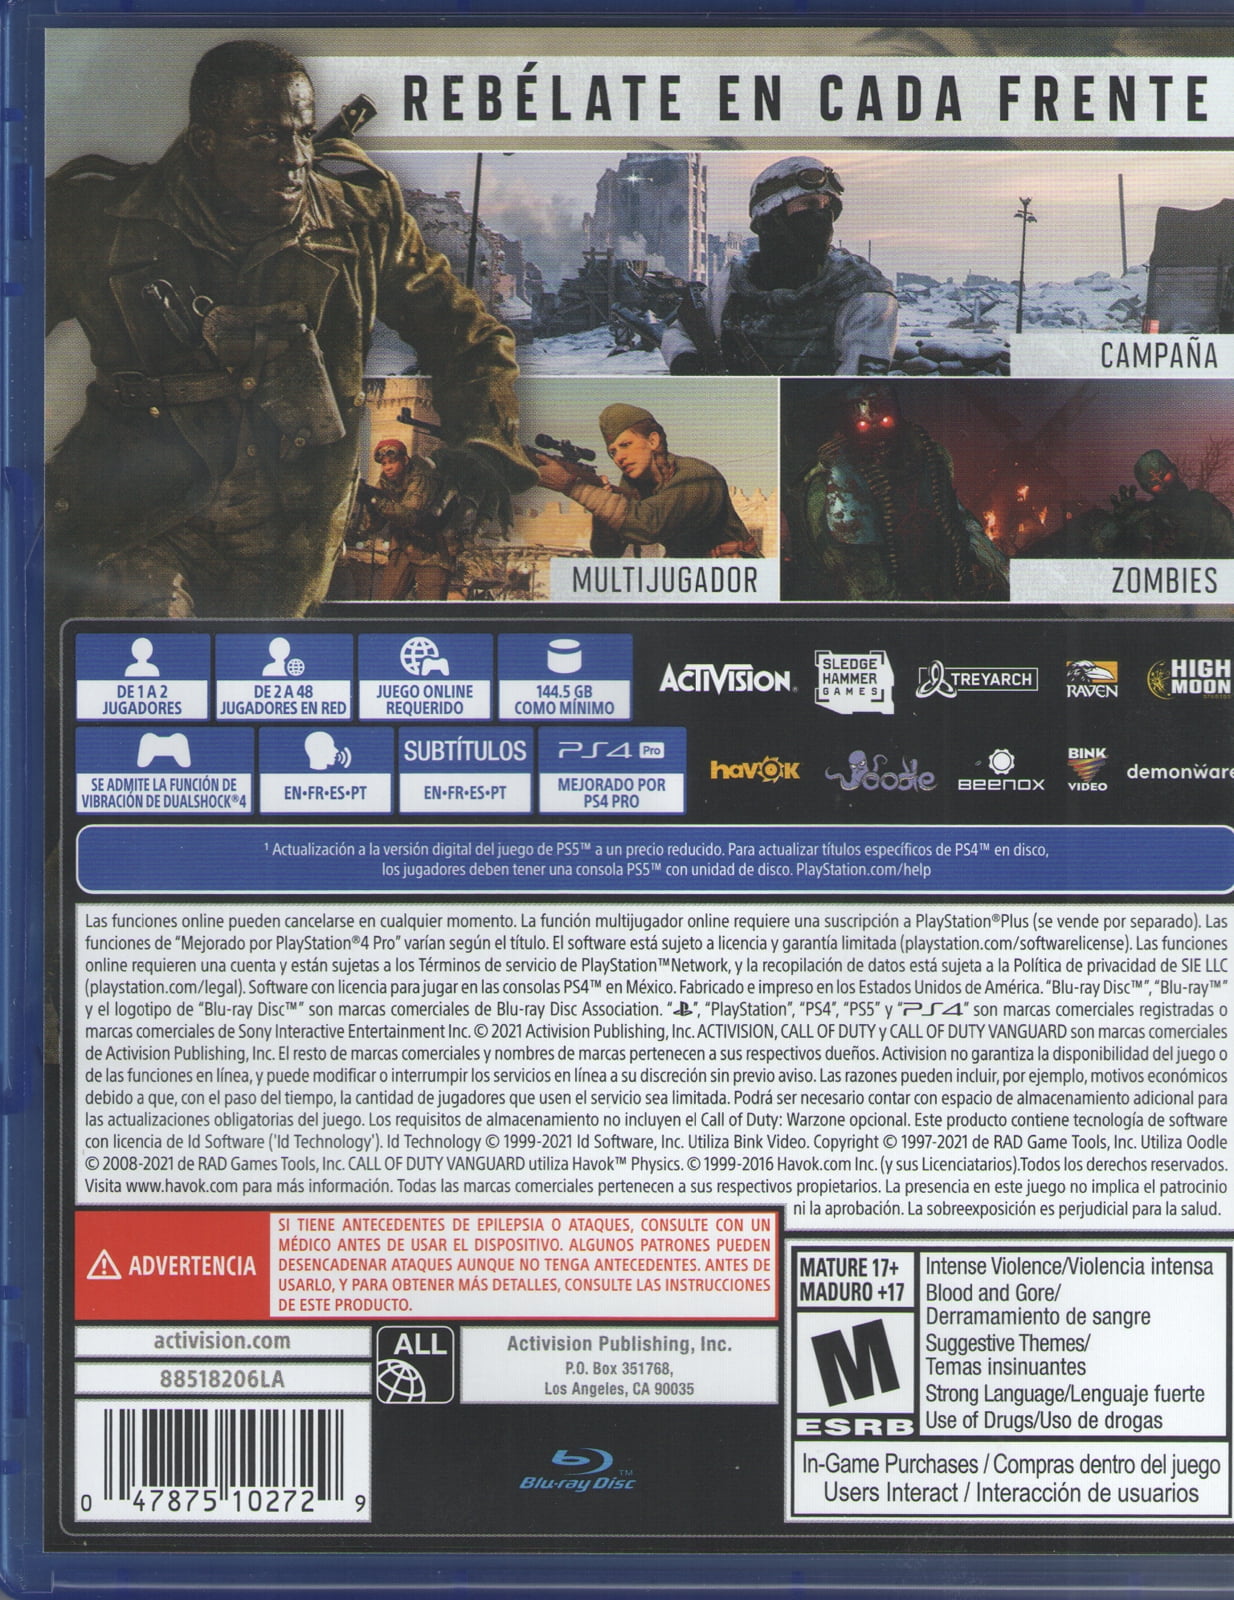 Call of Duty: Vanguard - PlayStation 4 - 20335337